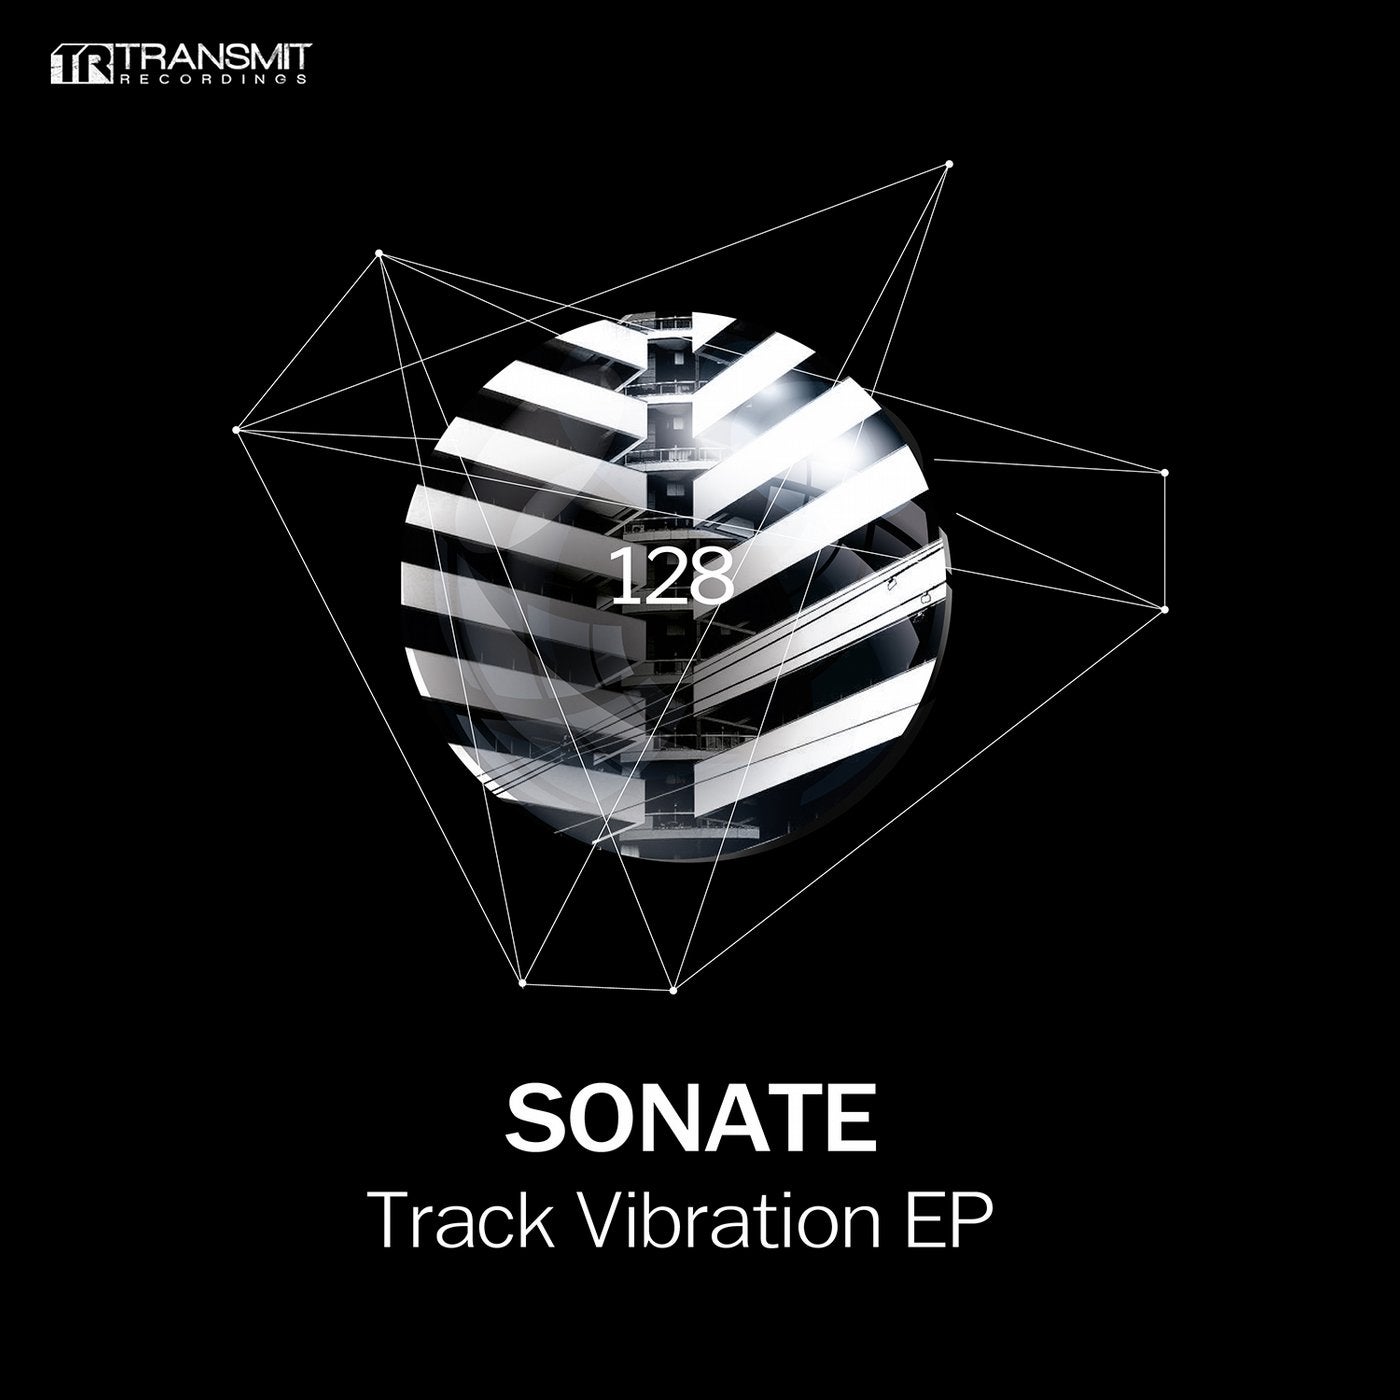 Track Vibration EP